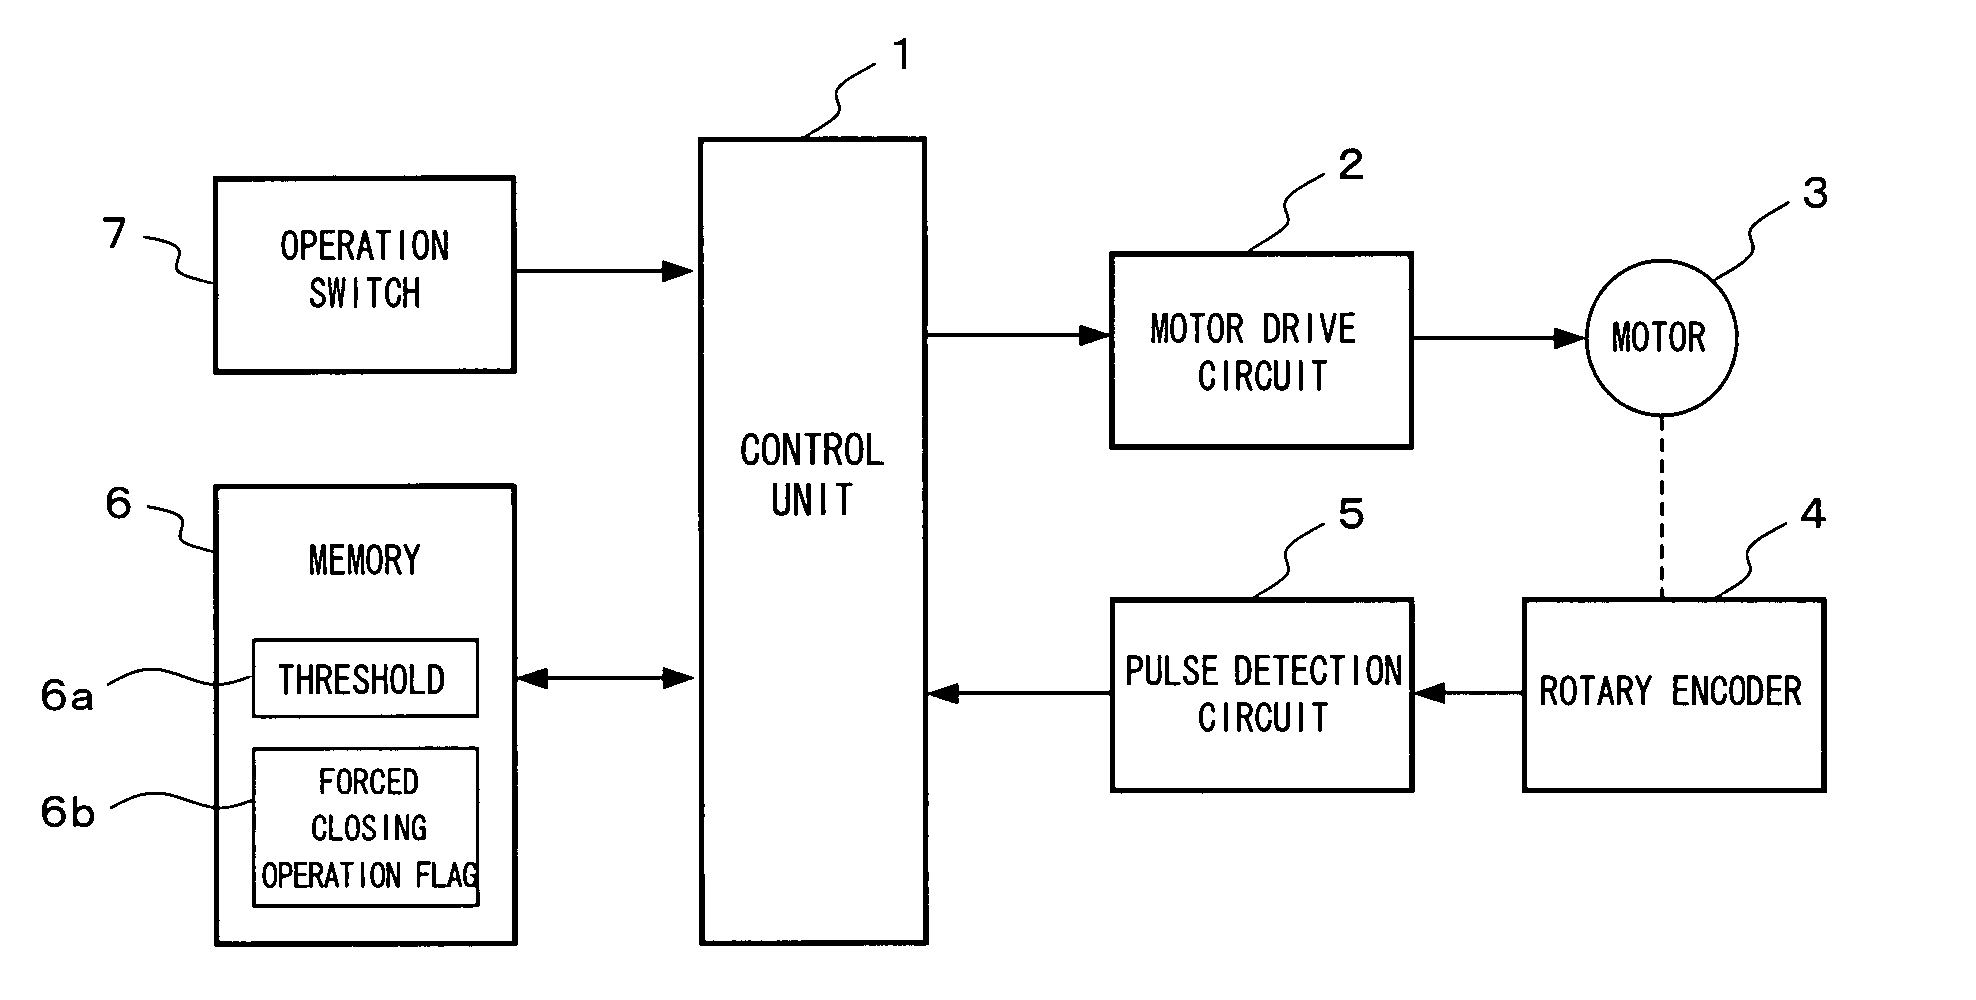 Open/close member control apparatus